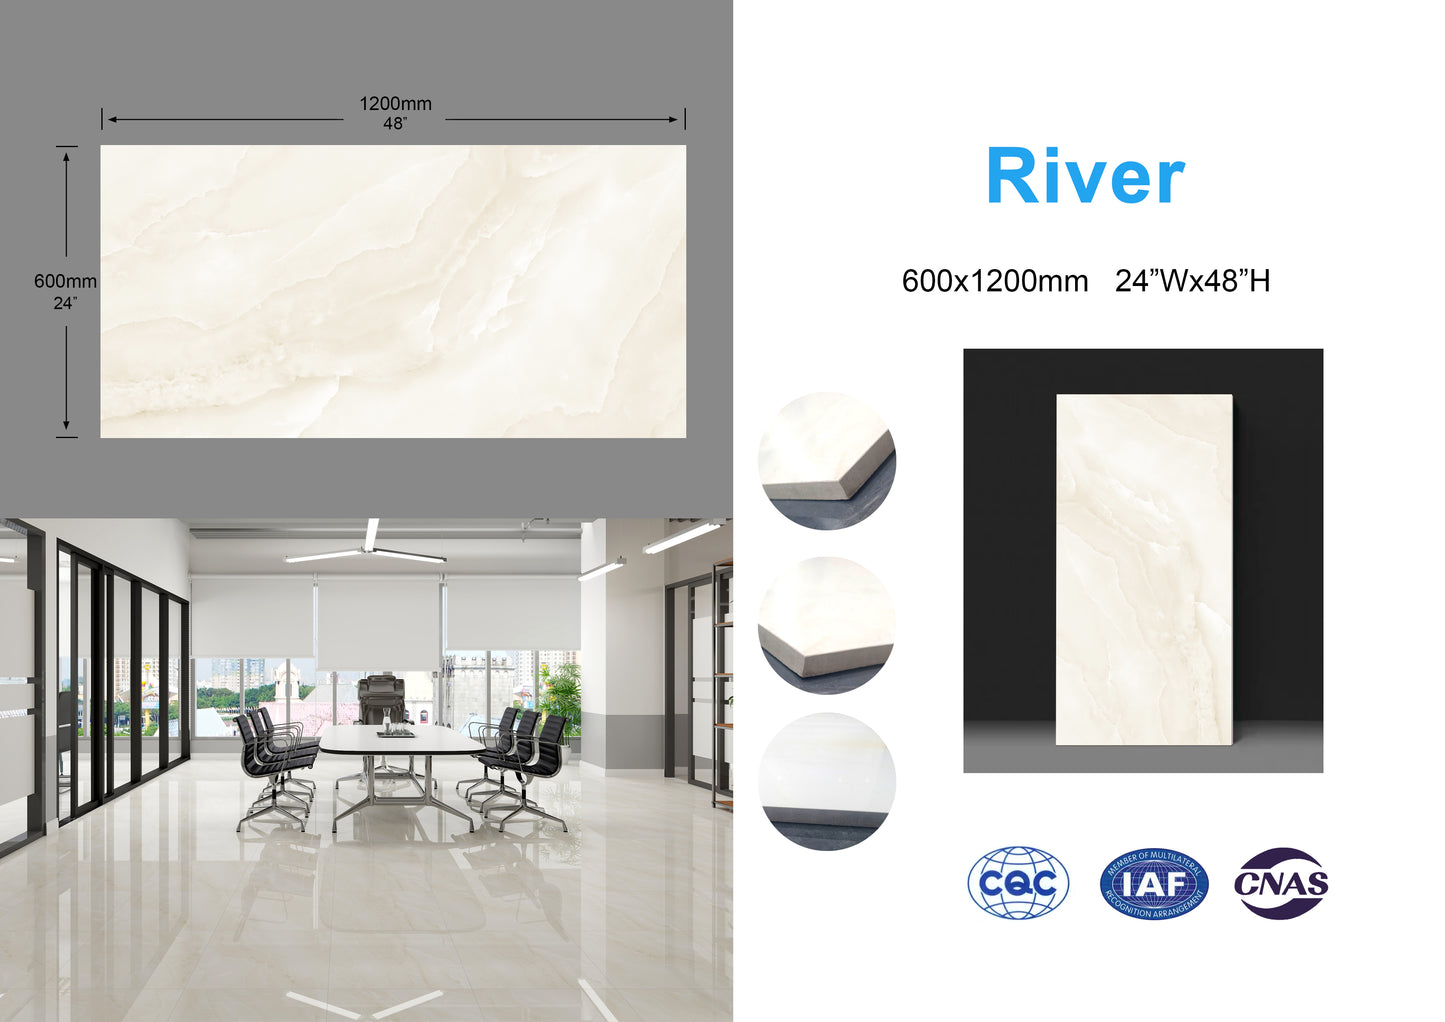 River family Full Polished Glazed Tile 24"x48" 3pcs/box 24sf/box $1.69/sf (15 days return/exchange) Bulk Deal 1000sf+ $1.59/SF(No return/no exchange)